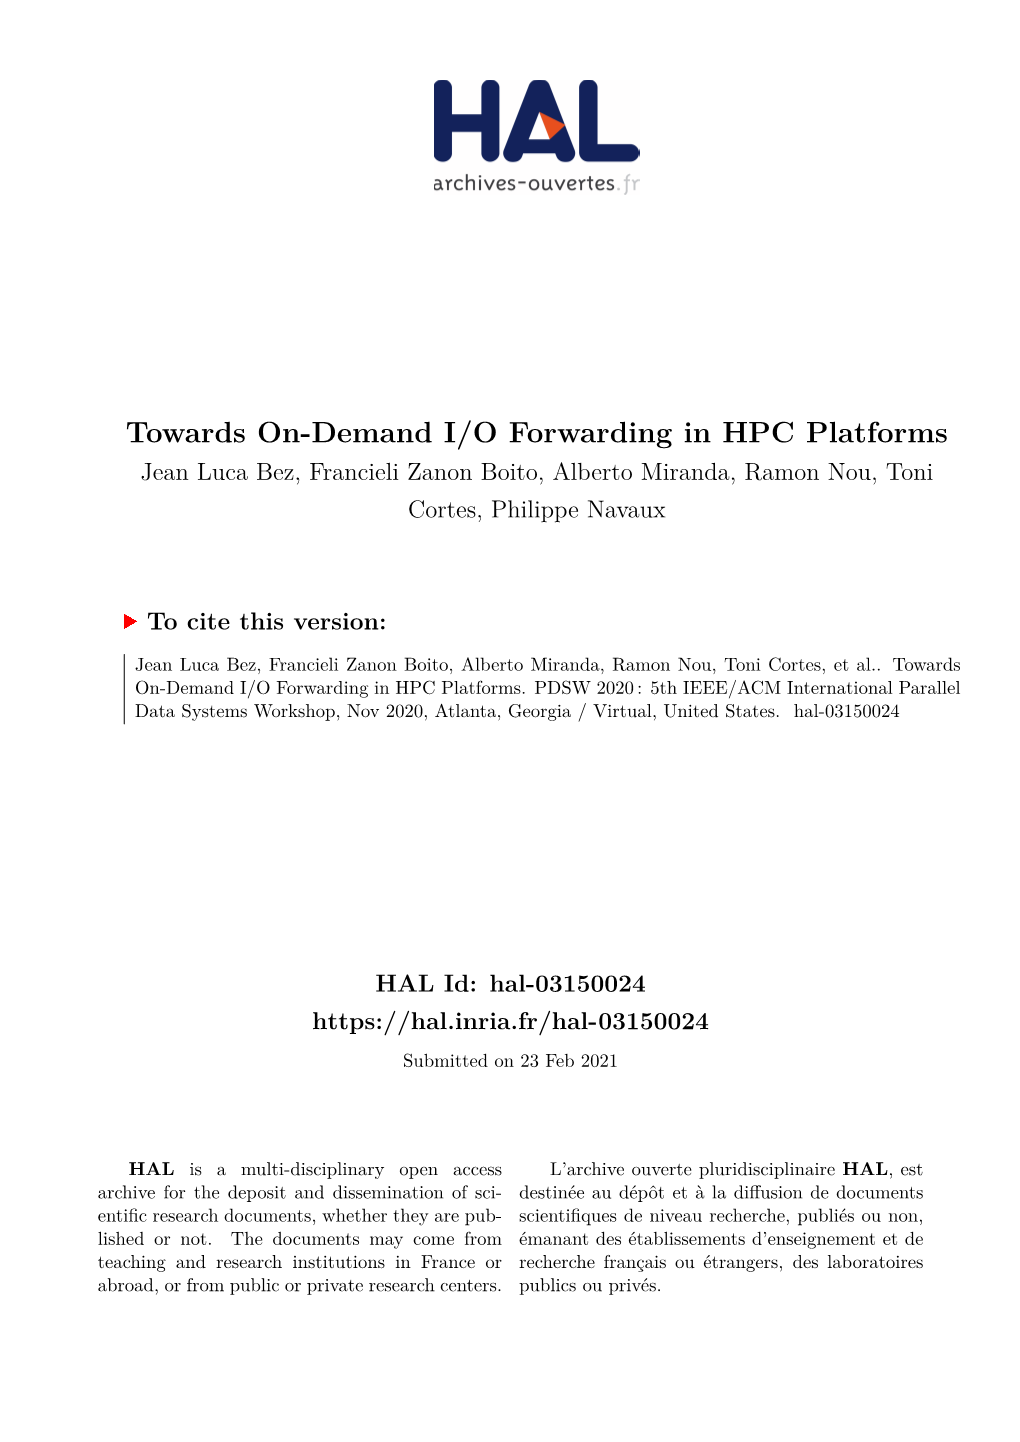 Towards On-Demand I/O Forwarding in HPC Platforms Jean Luca Bez, Francieli Zanon Boito, Alberto Miranda, Ramon Nou, Toni Cortes, Philippe Navaux